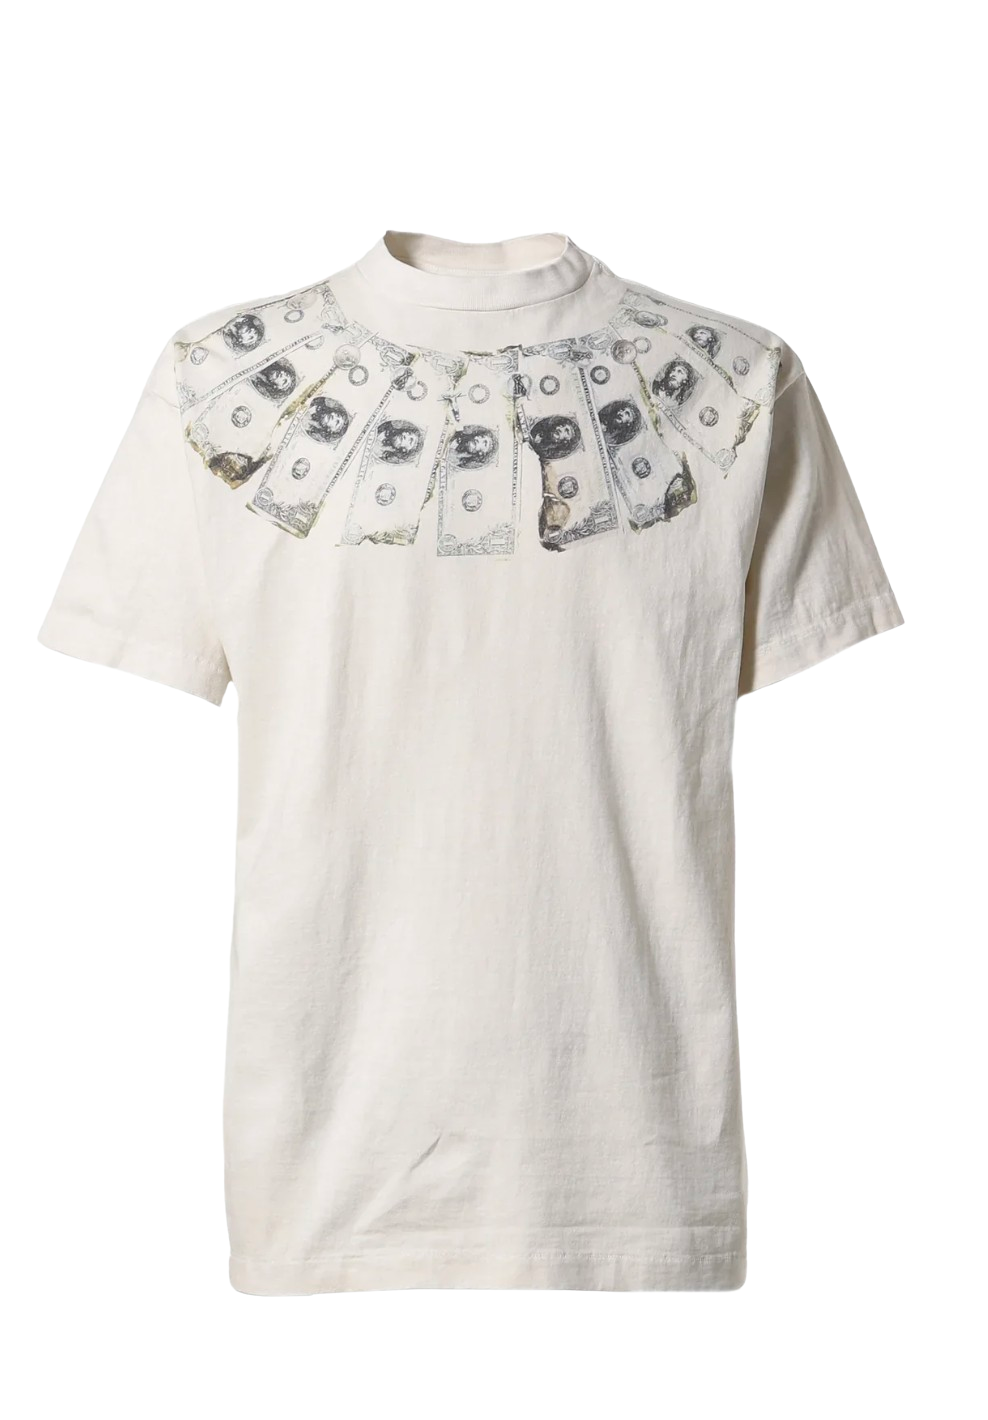 Saint Michael 'Money' T-Shirt